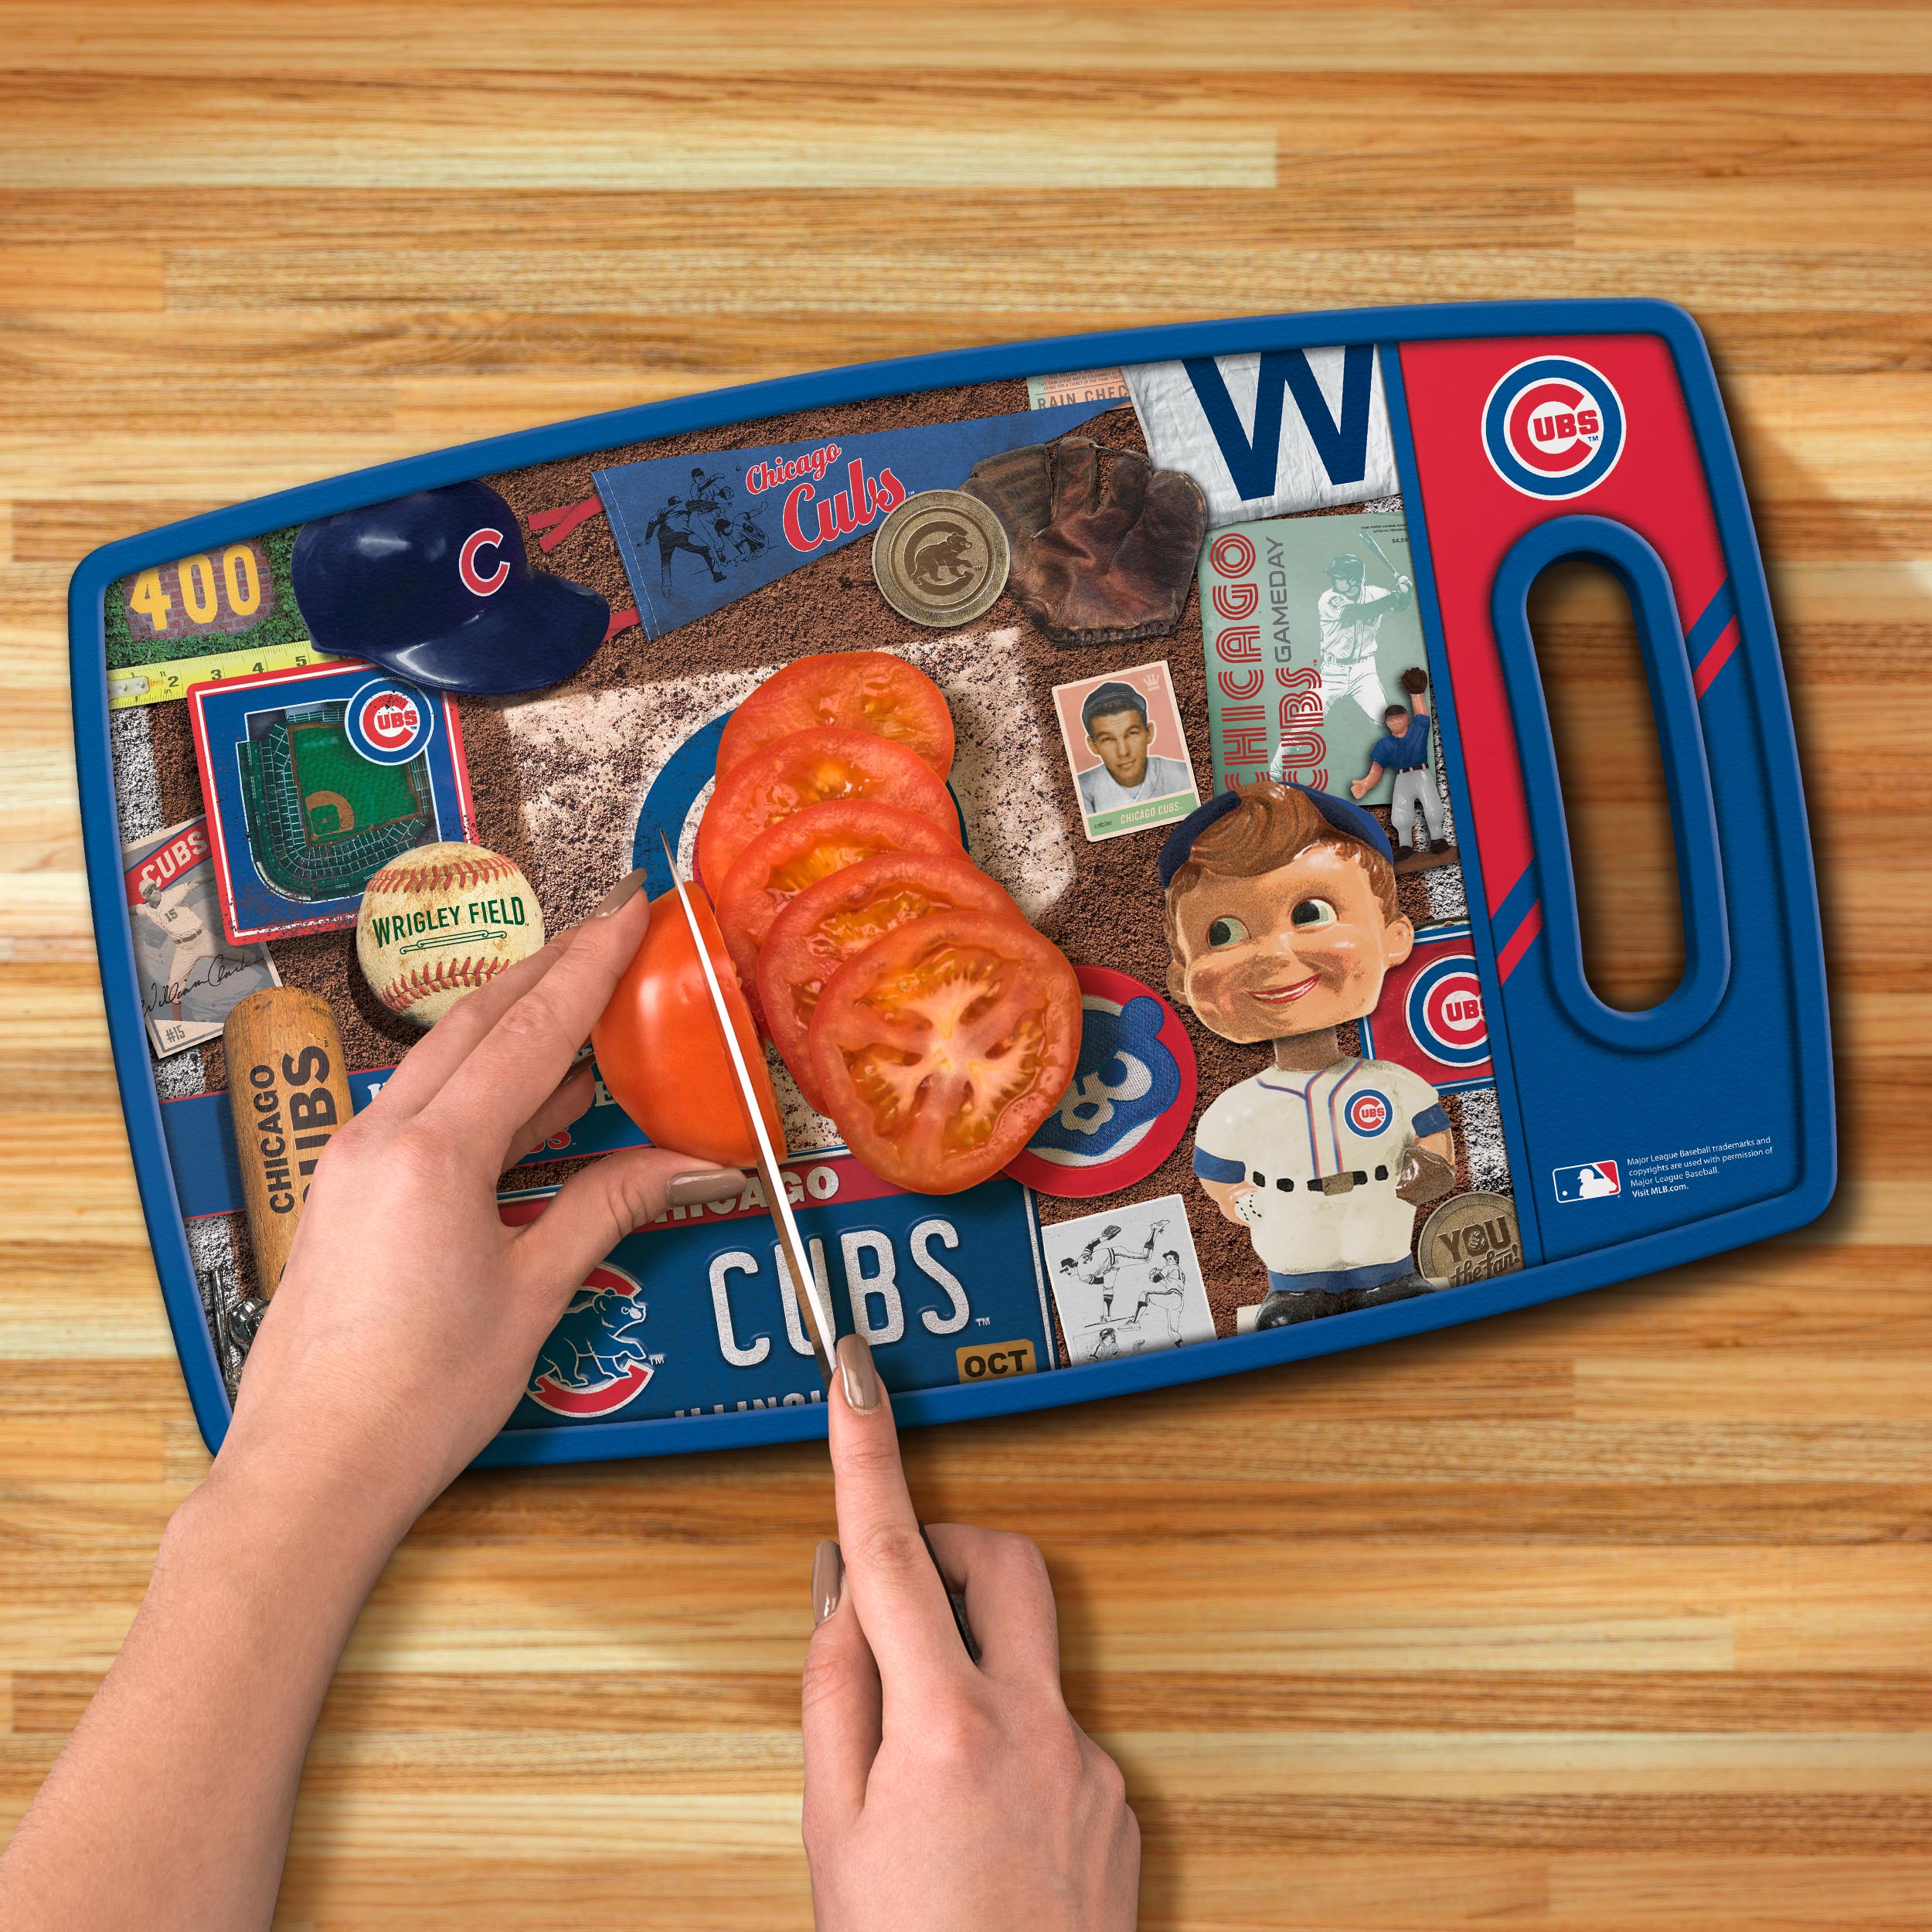 Baseball BBQ Chicago Cubs 12'' x Home Plate Cutting Board